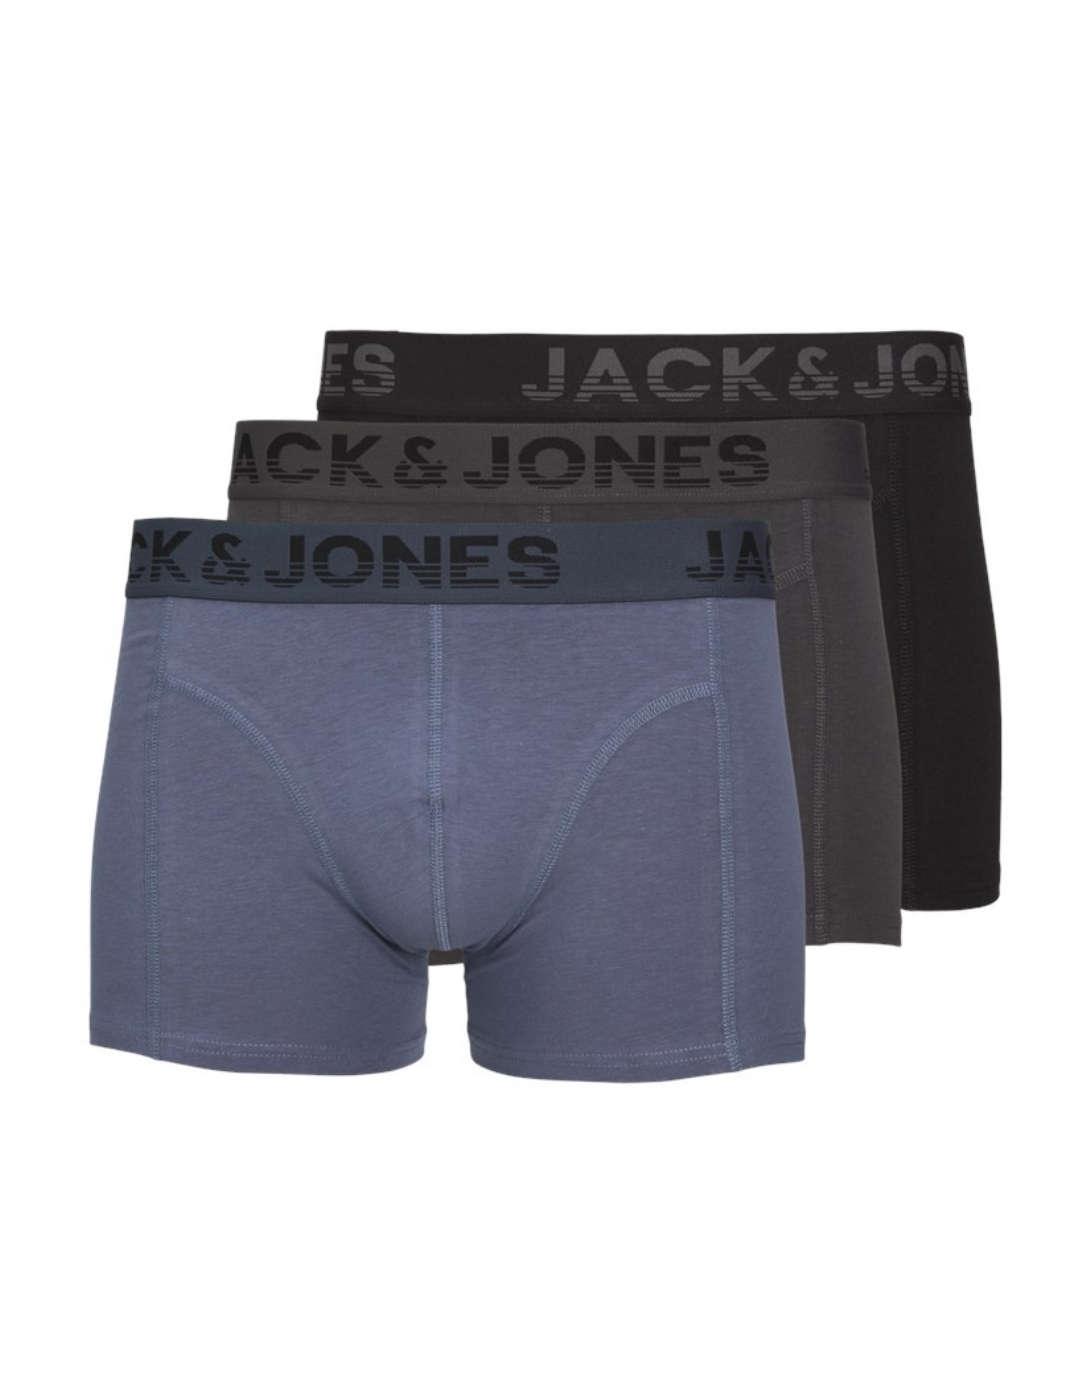 Íntimo Jack&Jones pack3 marino/gris/negro para hombre